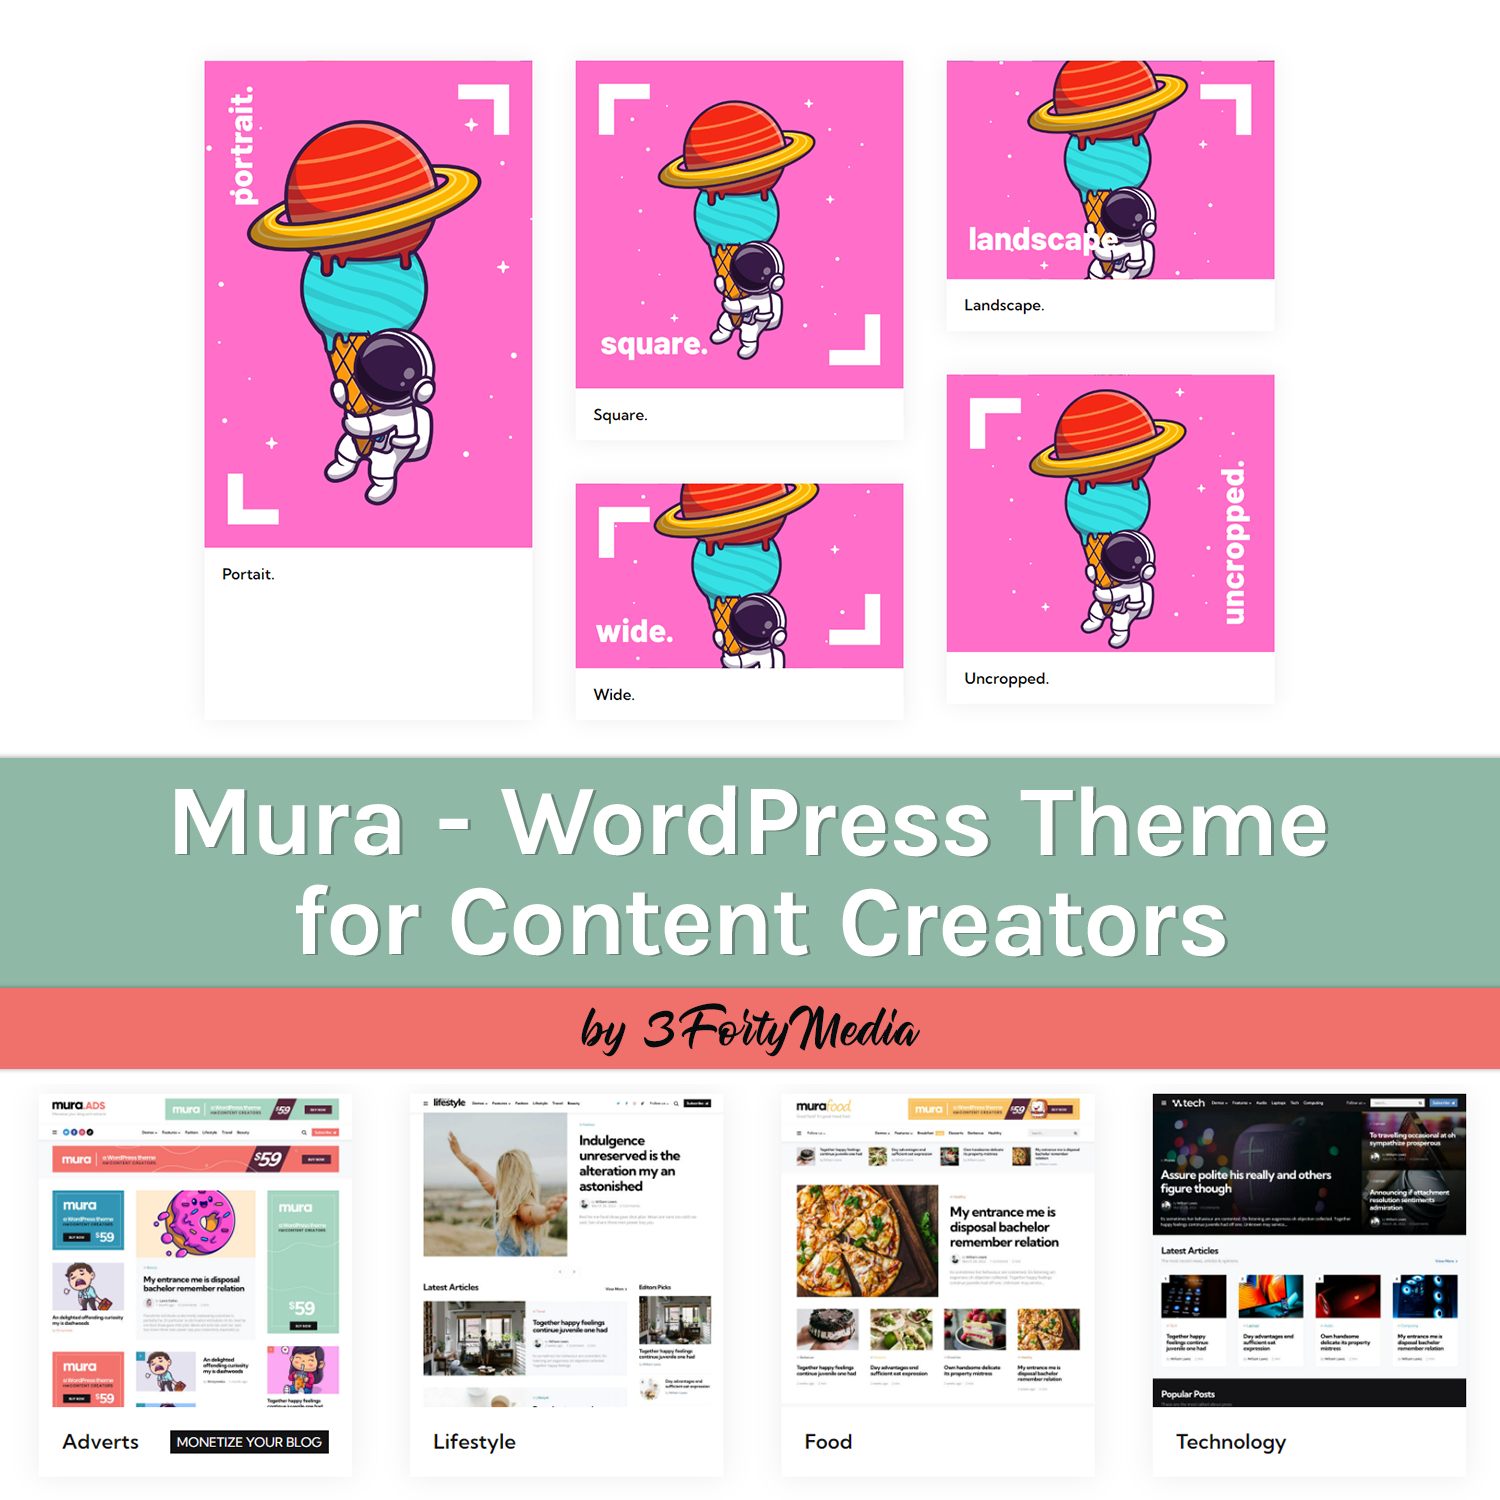 Preview mura wordpress theme for content creators.